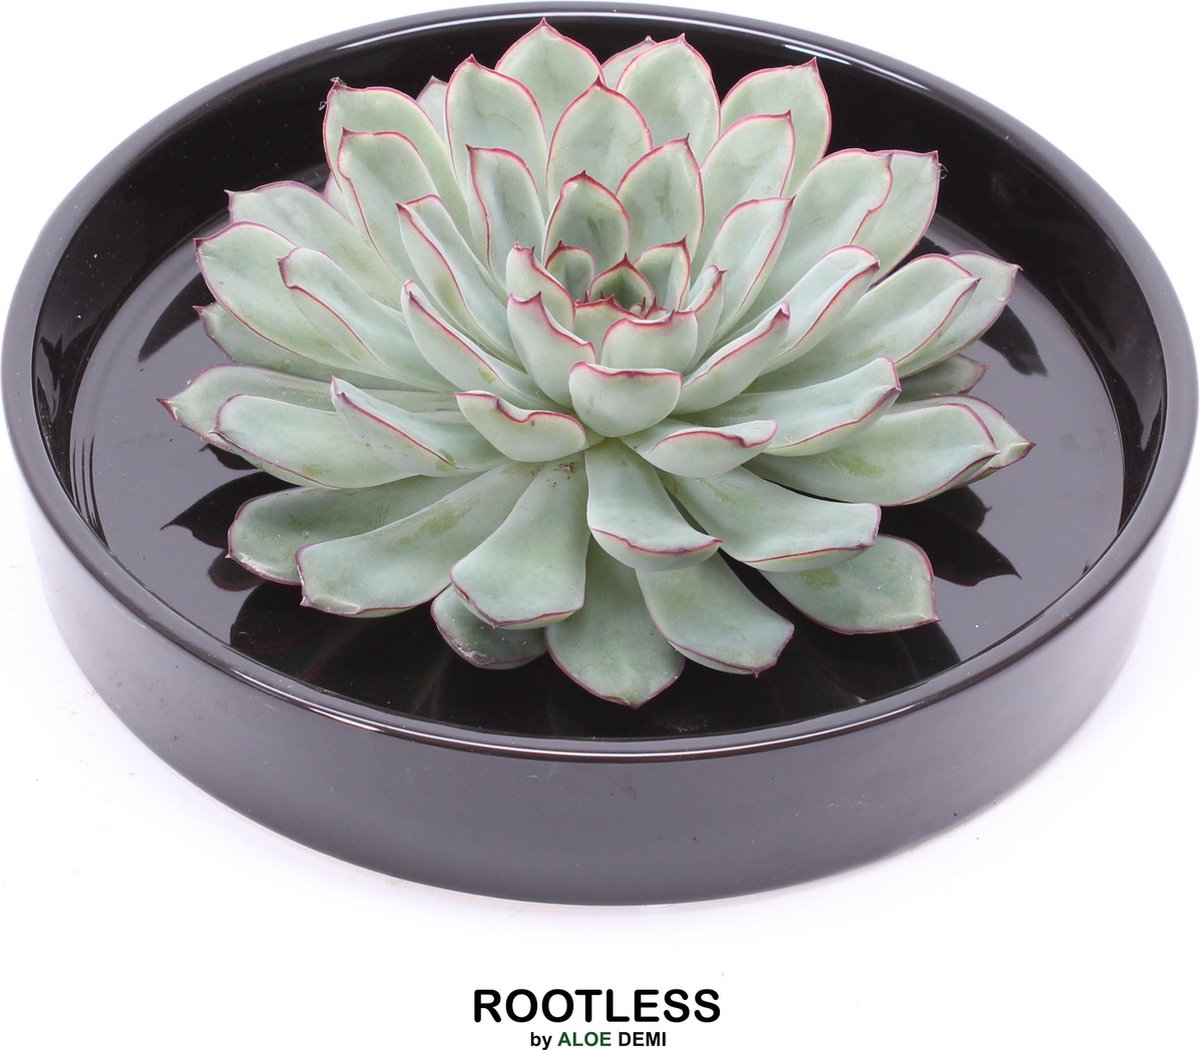 ROOTLESS Echeveria groen - vetplant - zwart pot 20 cm - ZERO water